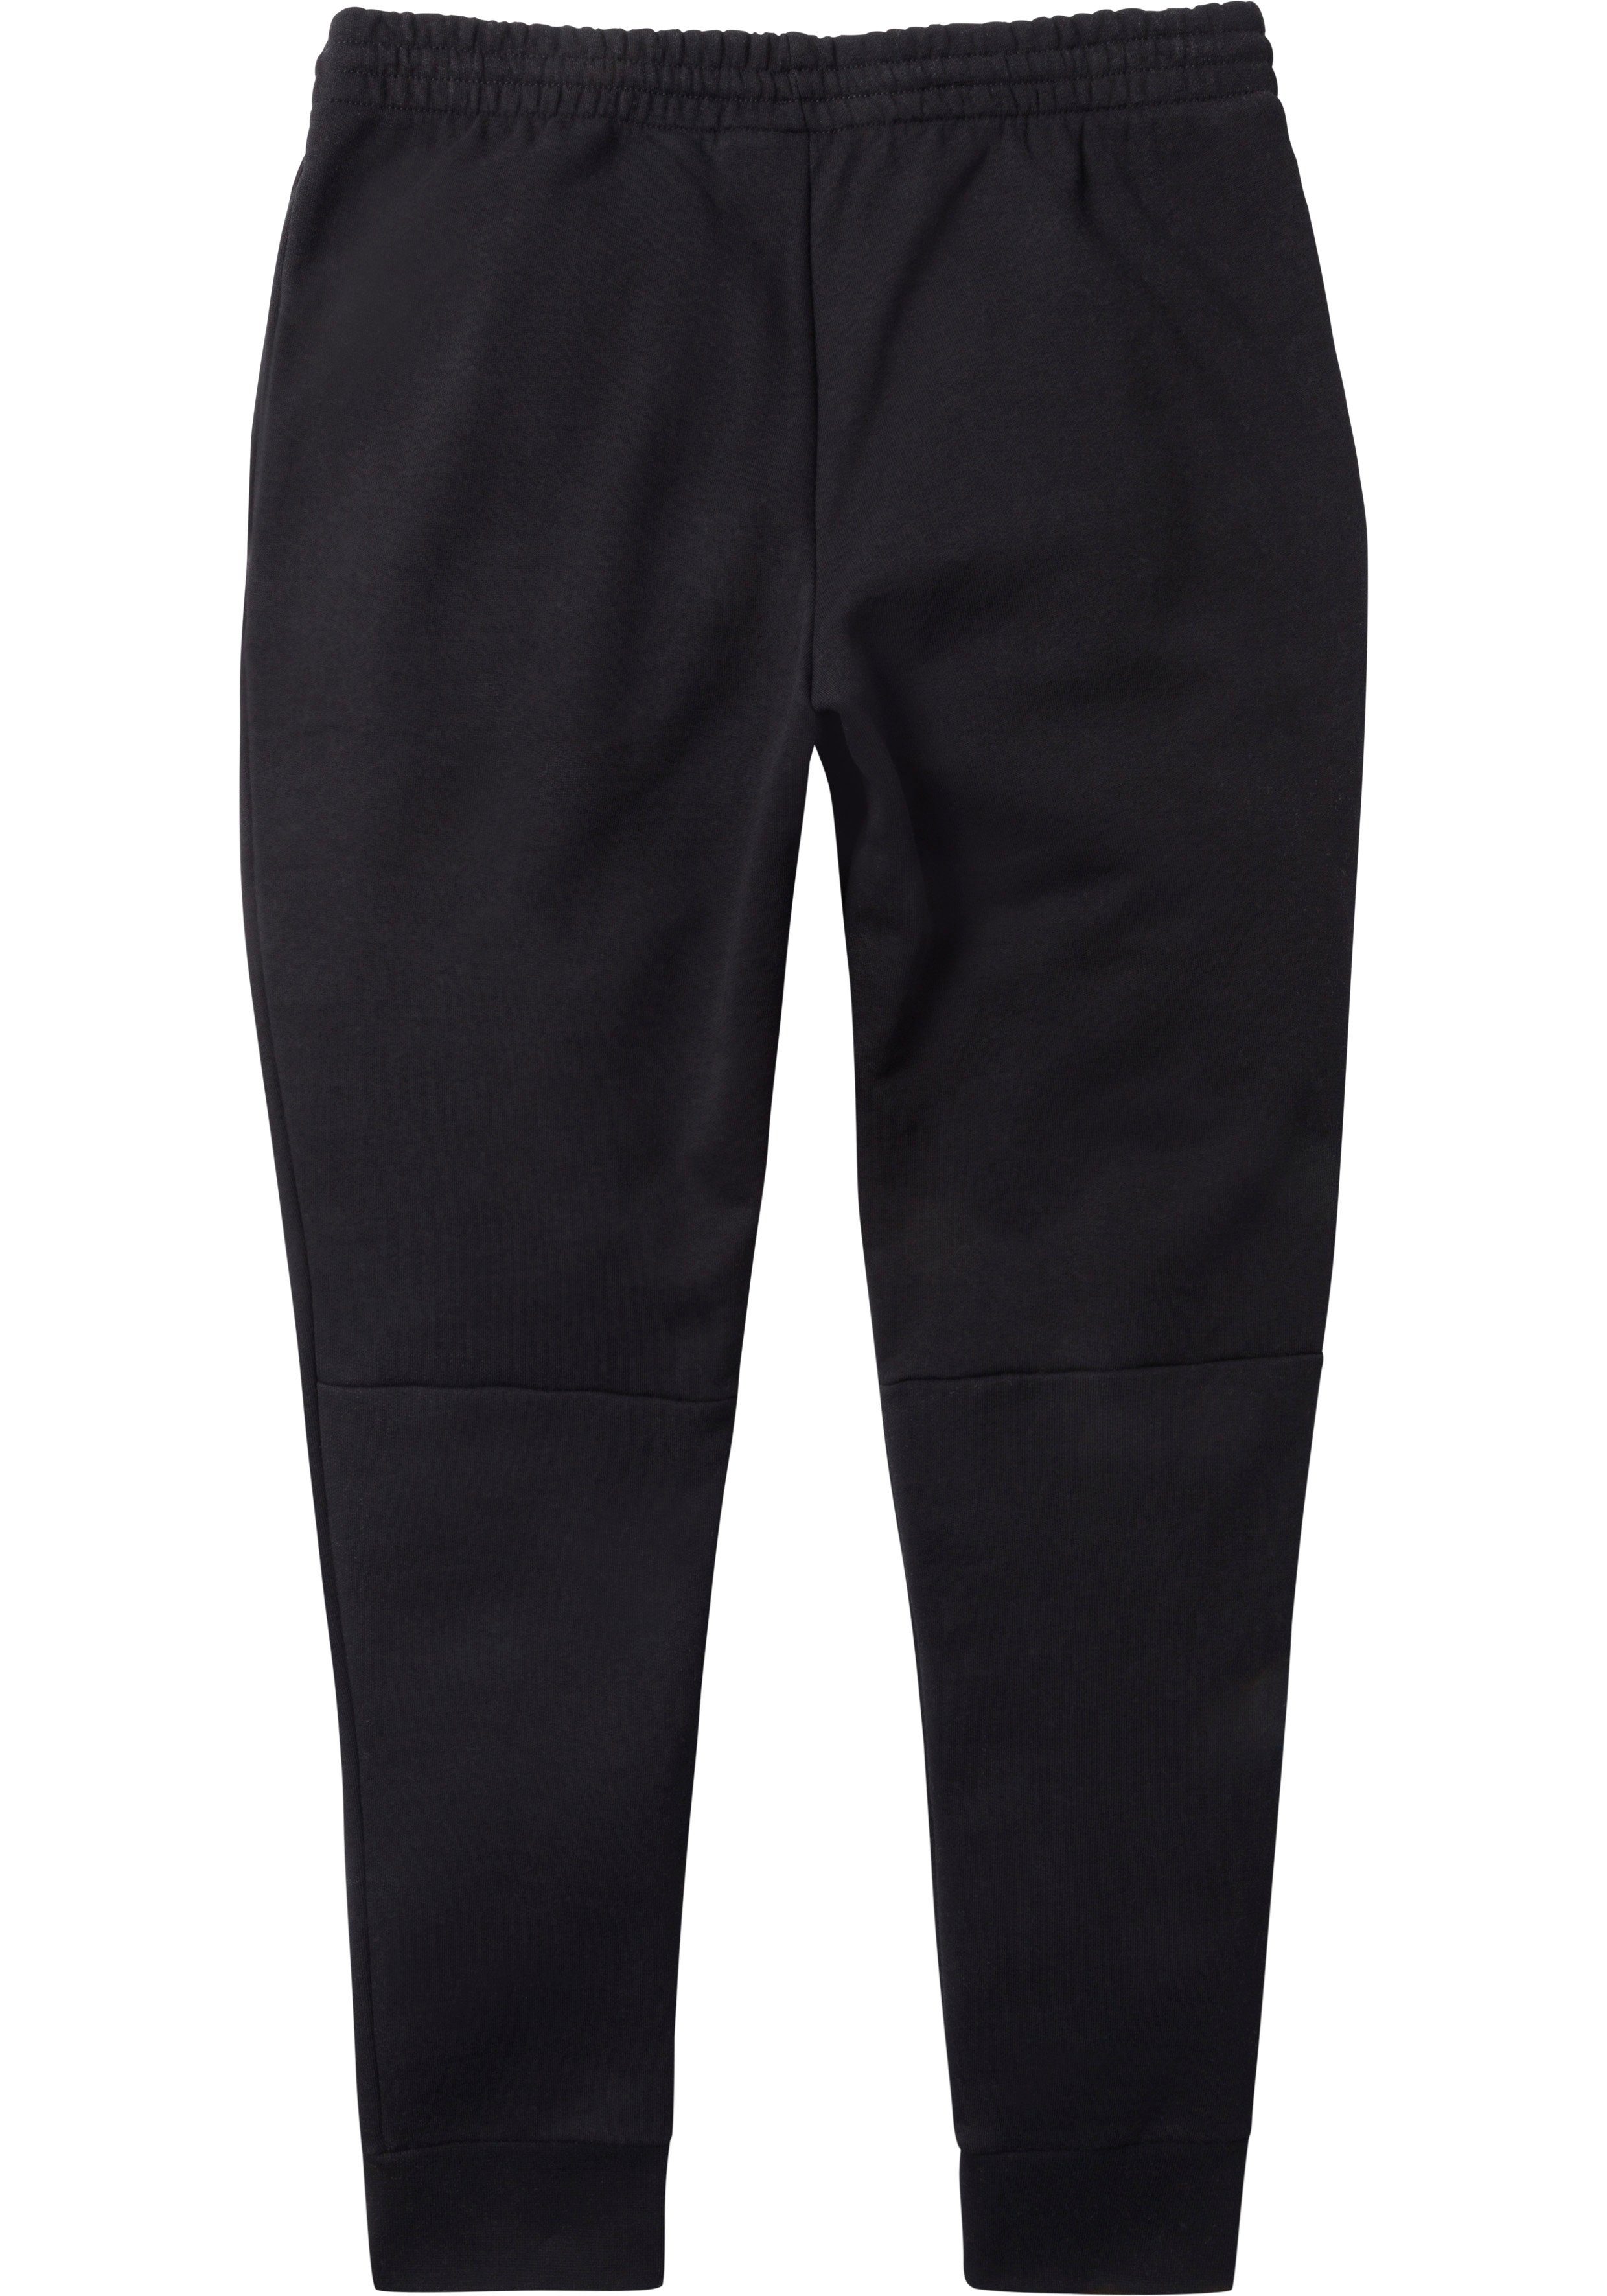 Lacoste Sweatpants im schwarz Look unifarbenen